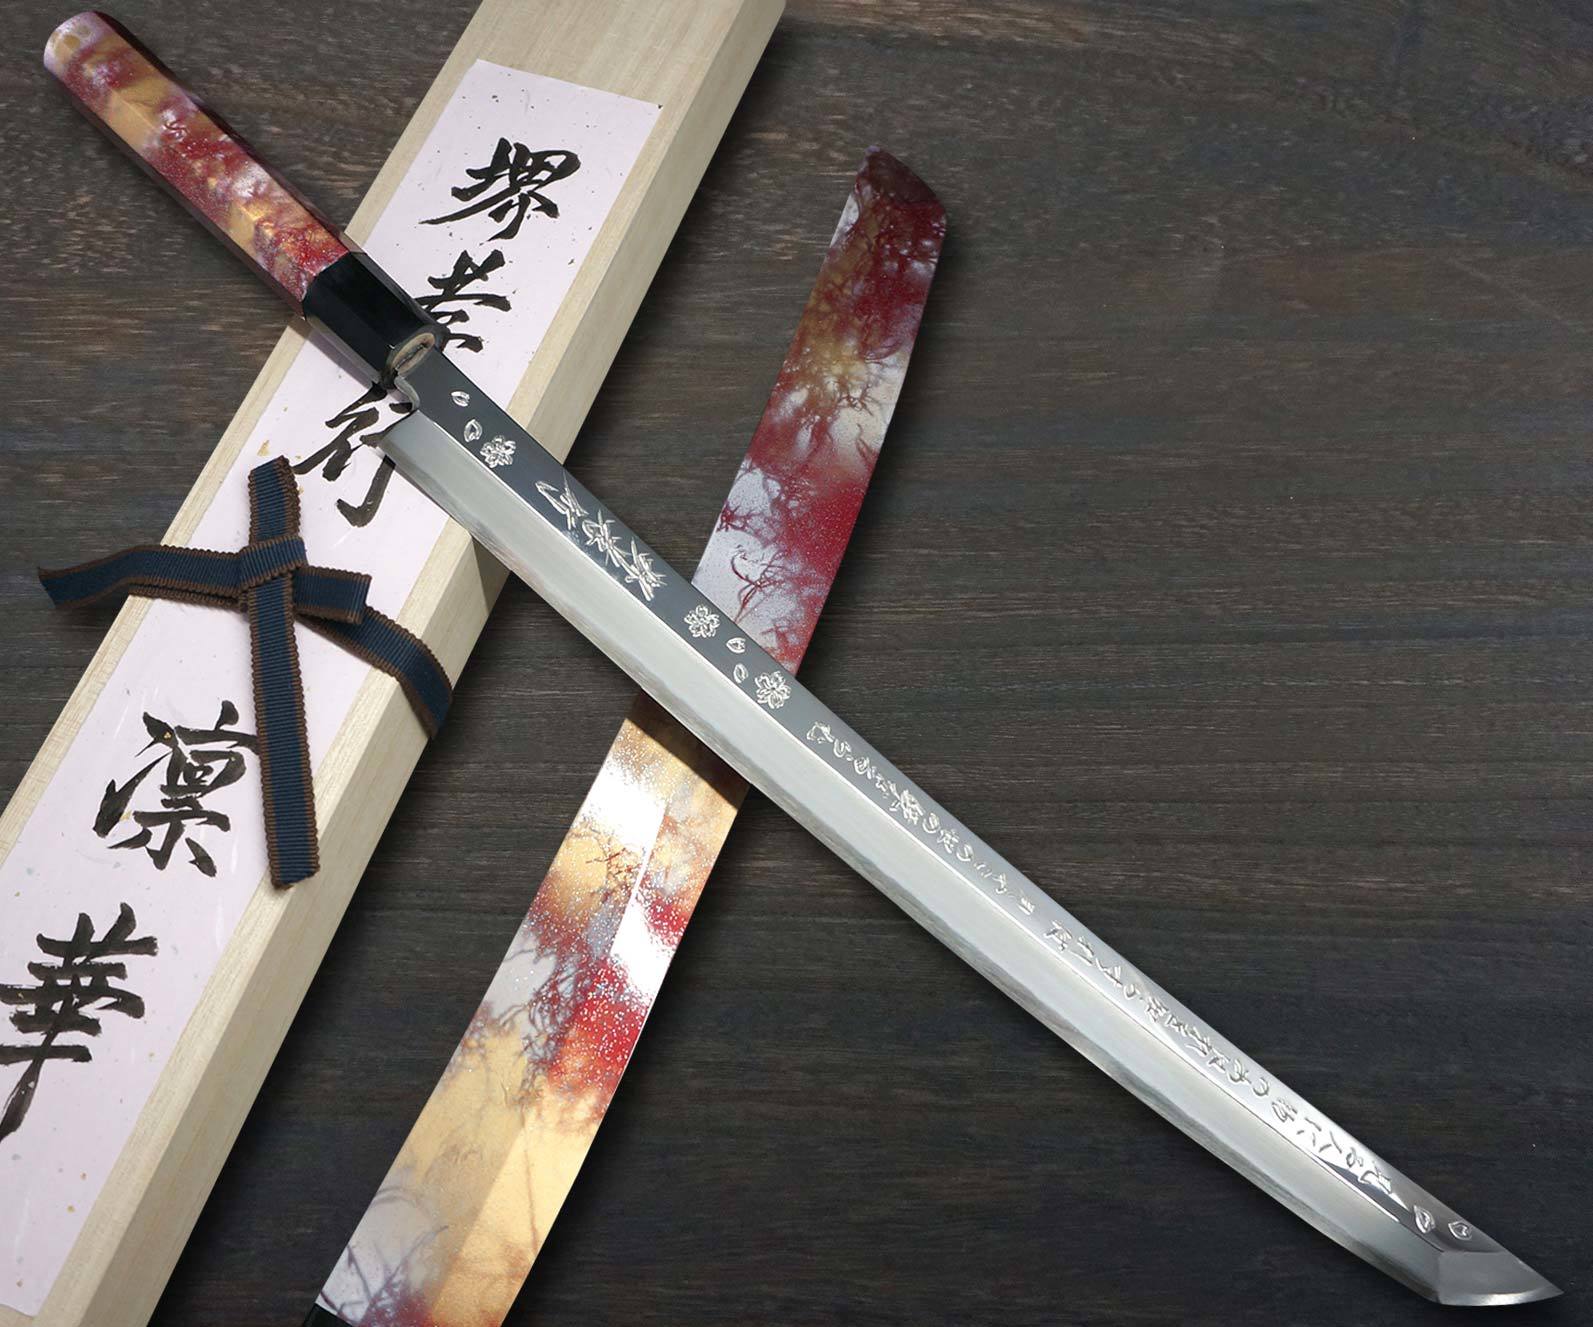 Mitsumoto Sakari 7 inch Damascus Japanese Chef's Knives, Hand Forged AUS-10 Kiritsuke Chef Knife with Pakkawood Handle, Professional Super Stainless